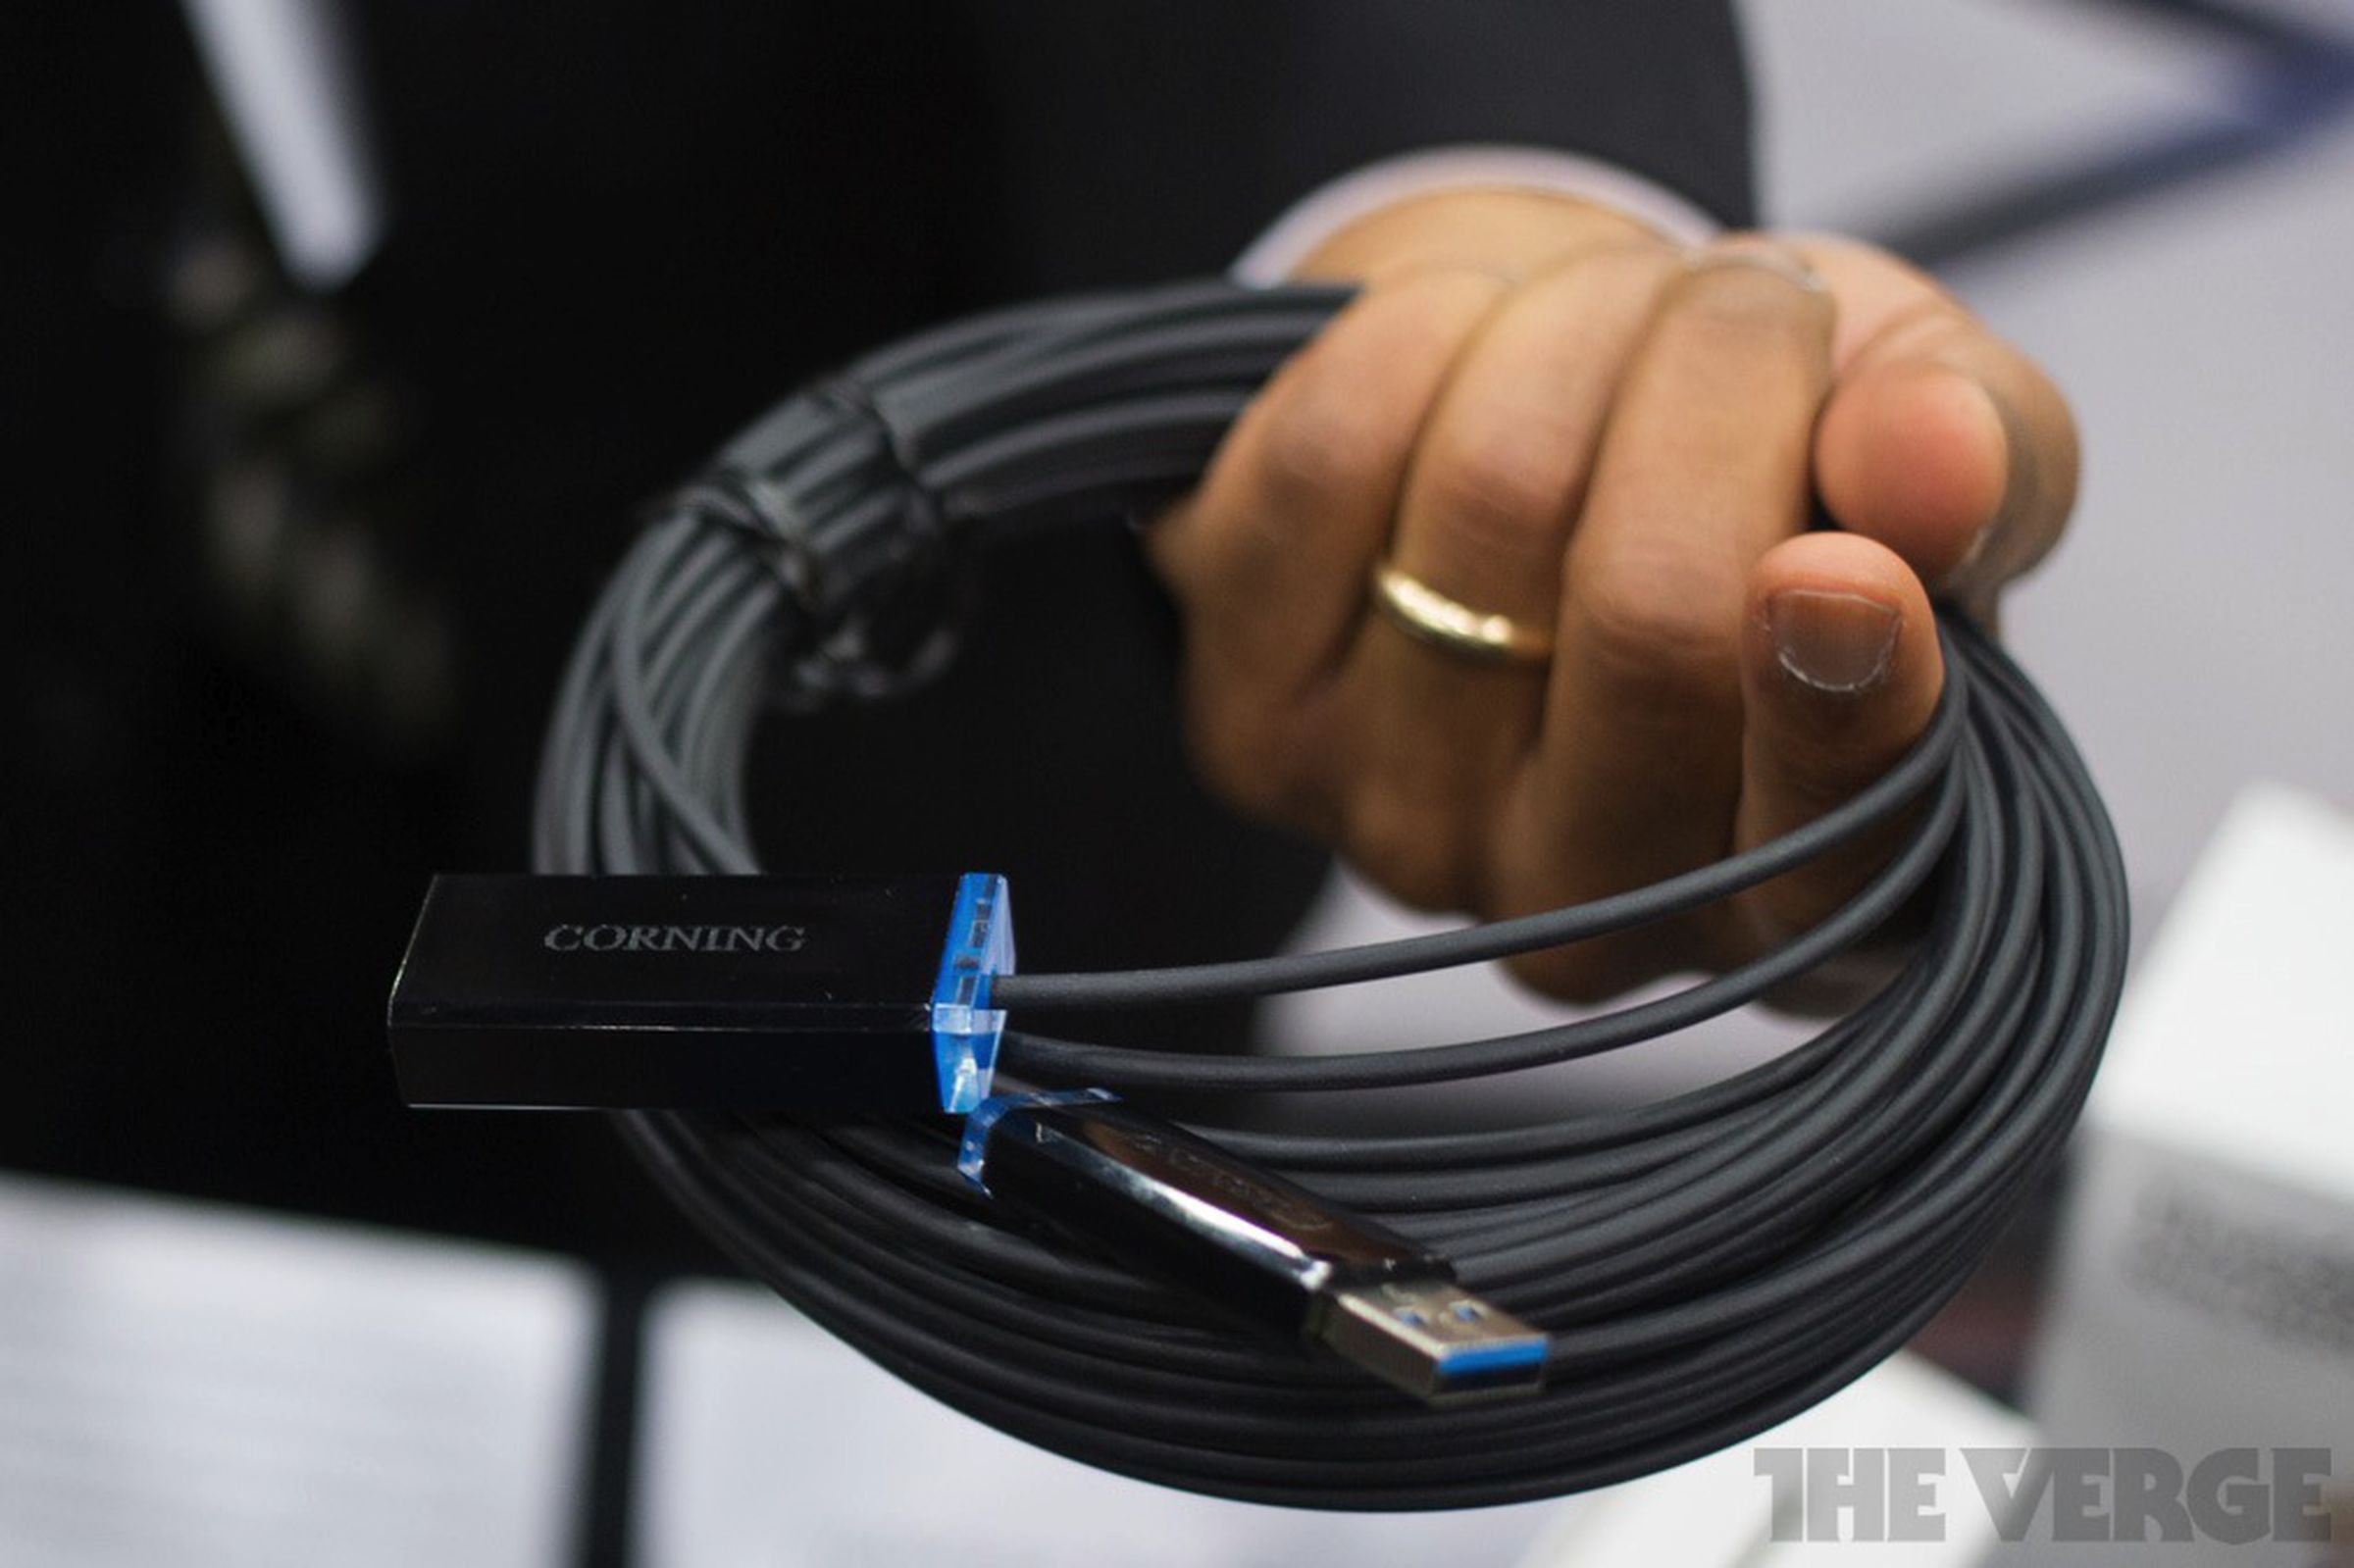 Corning optical Thunderbolt and USB cable photos